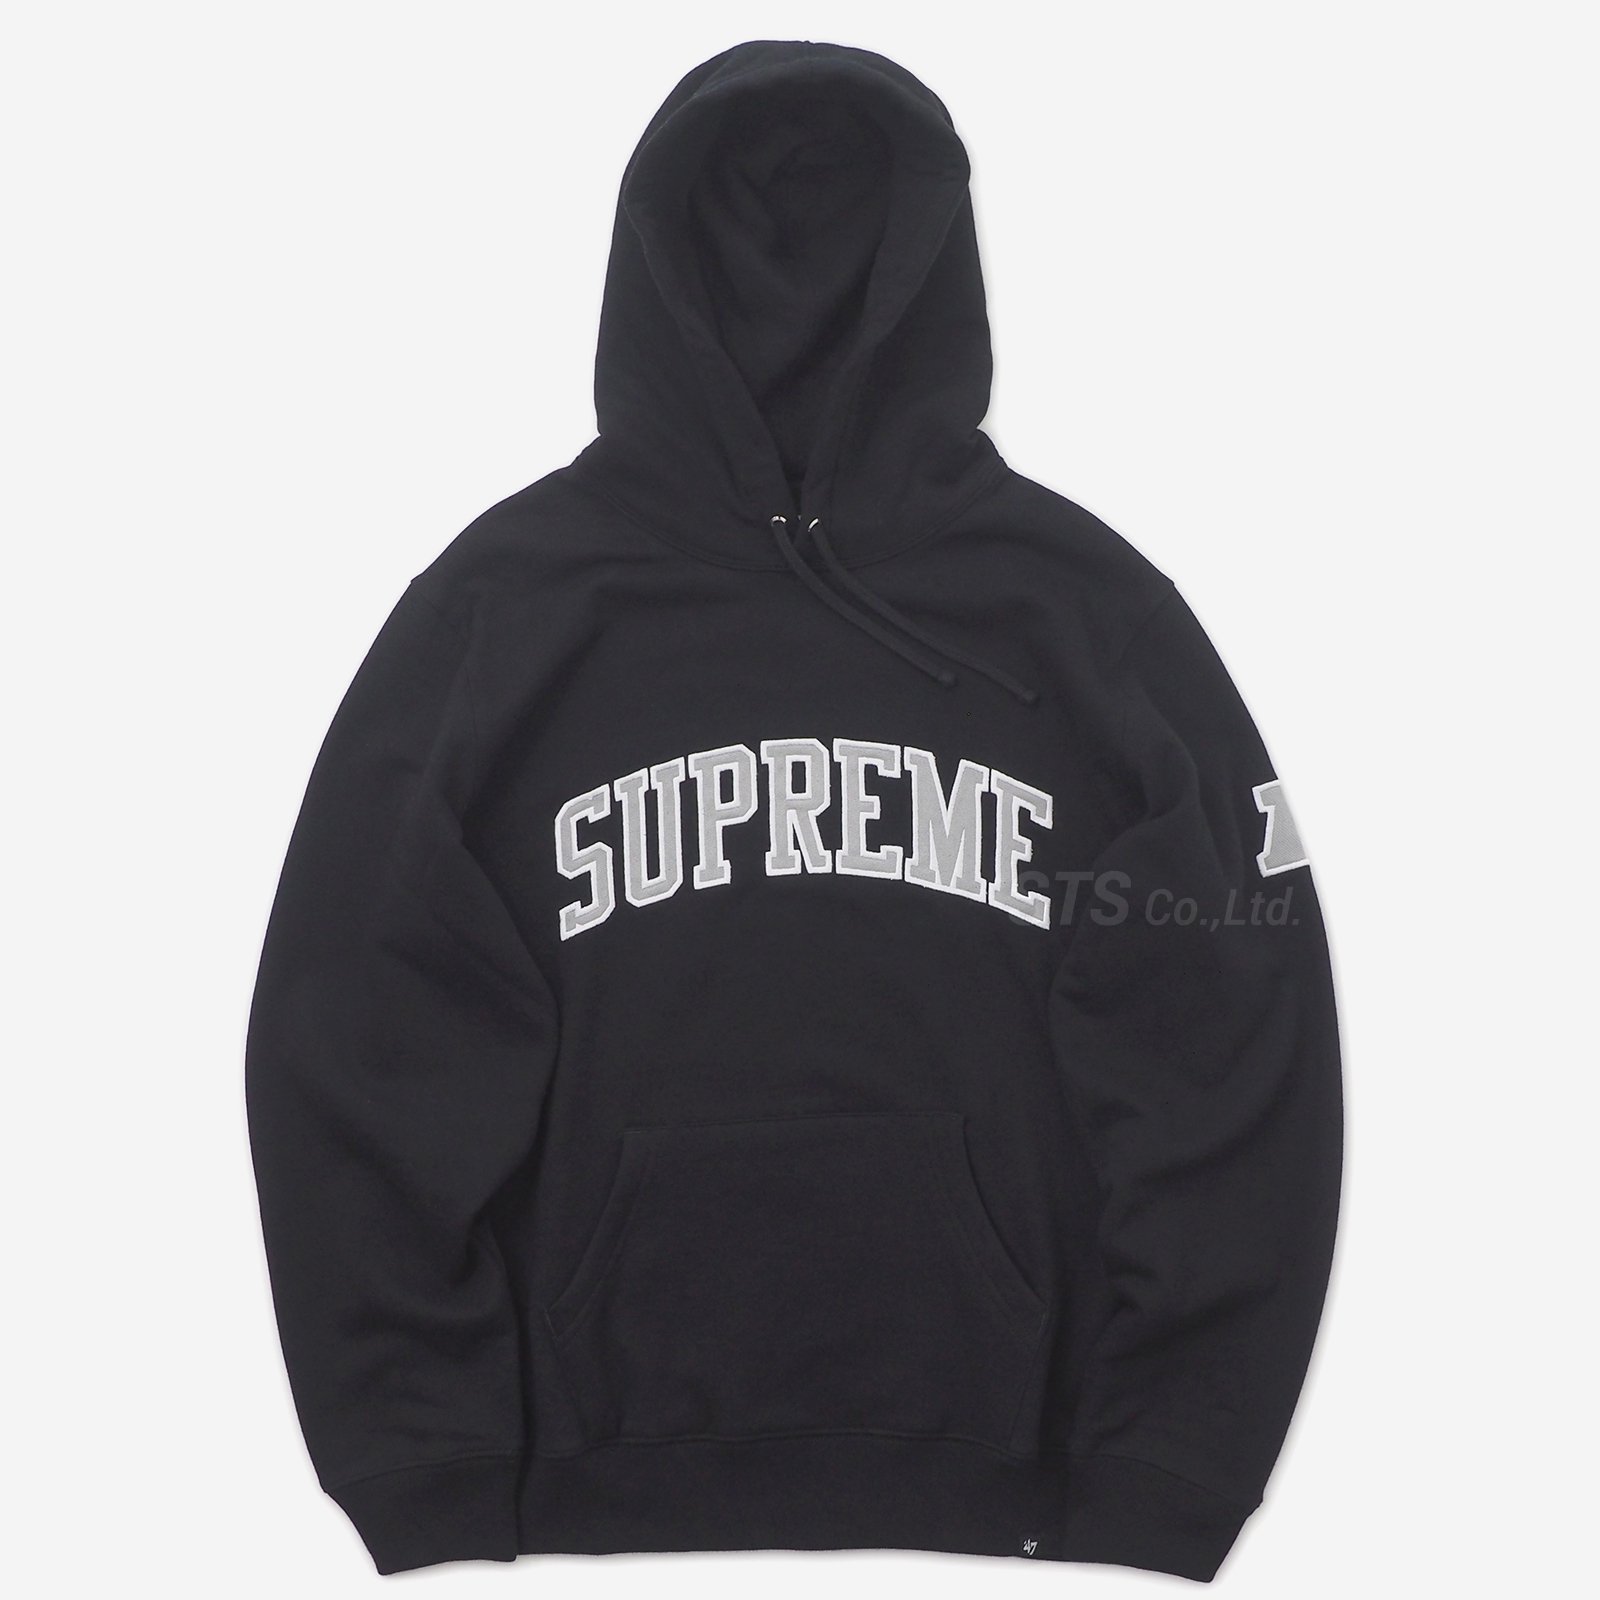 Supreme®/Raiders/’47 Hooded Sweatshirt